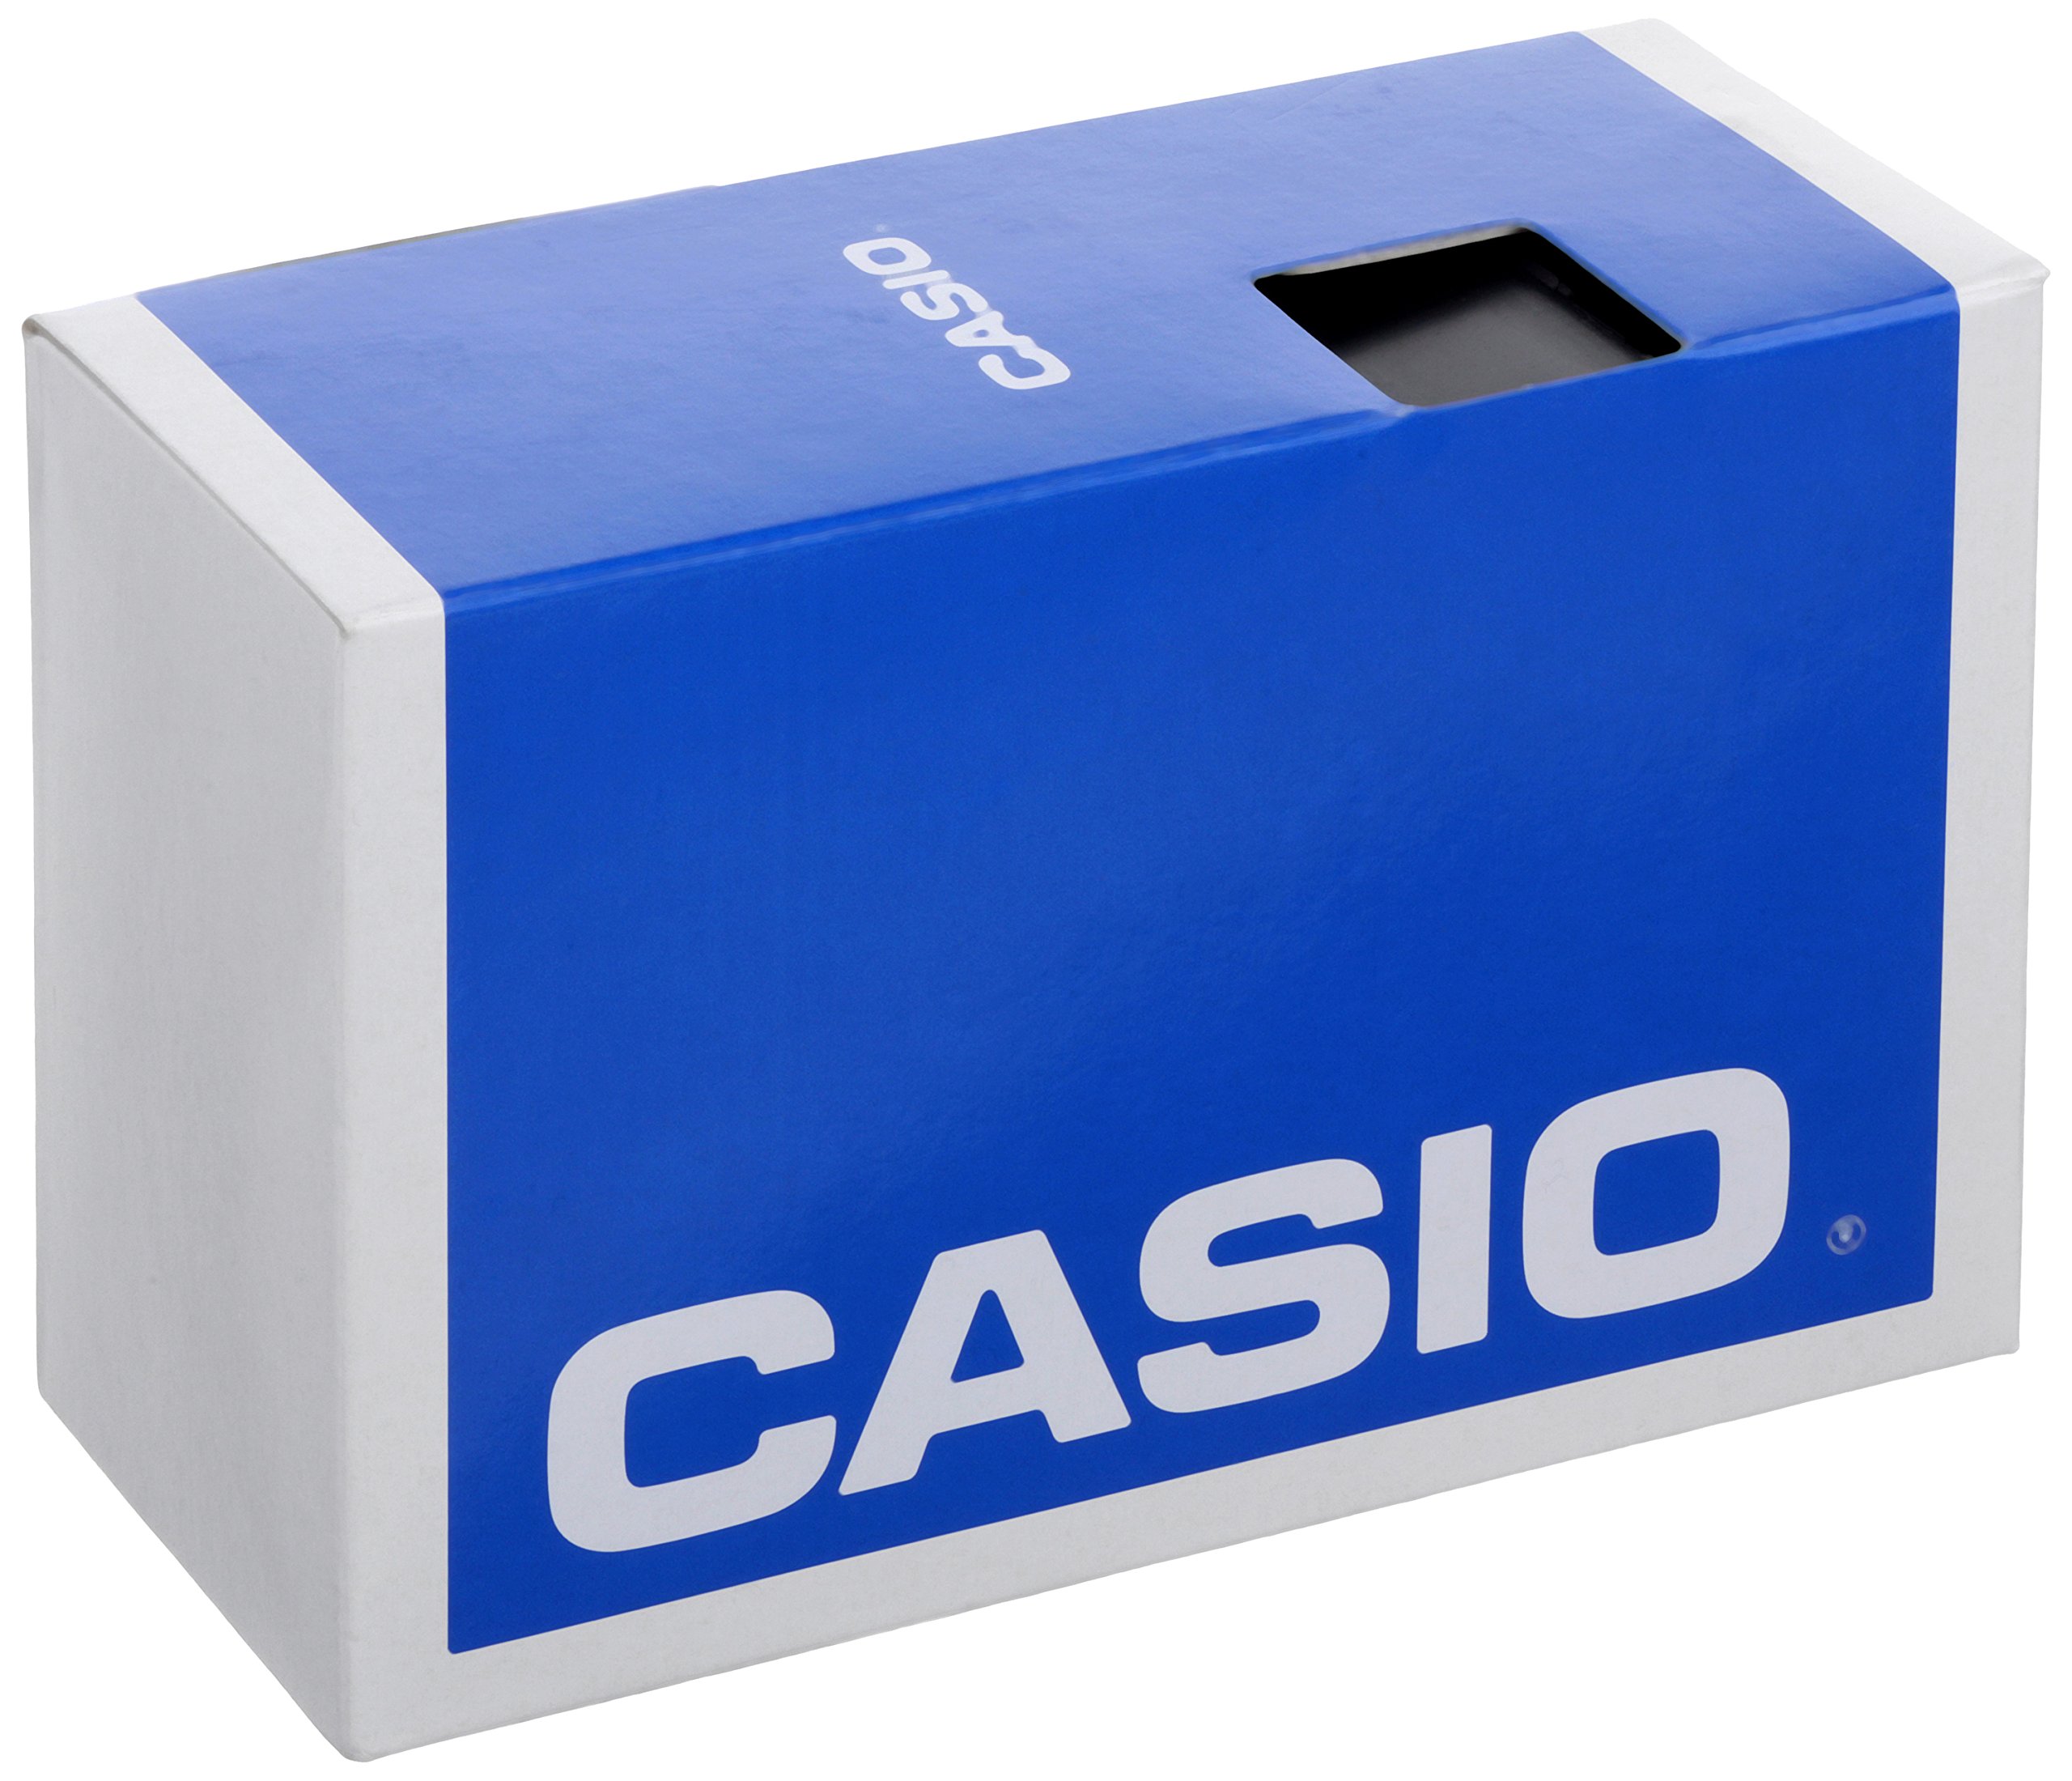 Casio Men's Sports Quartz Watch with Resin Strap, Gold, 28.6 (Model: AEQ-110BW-9AVCF)